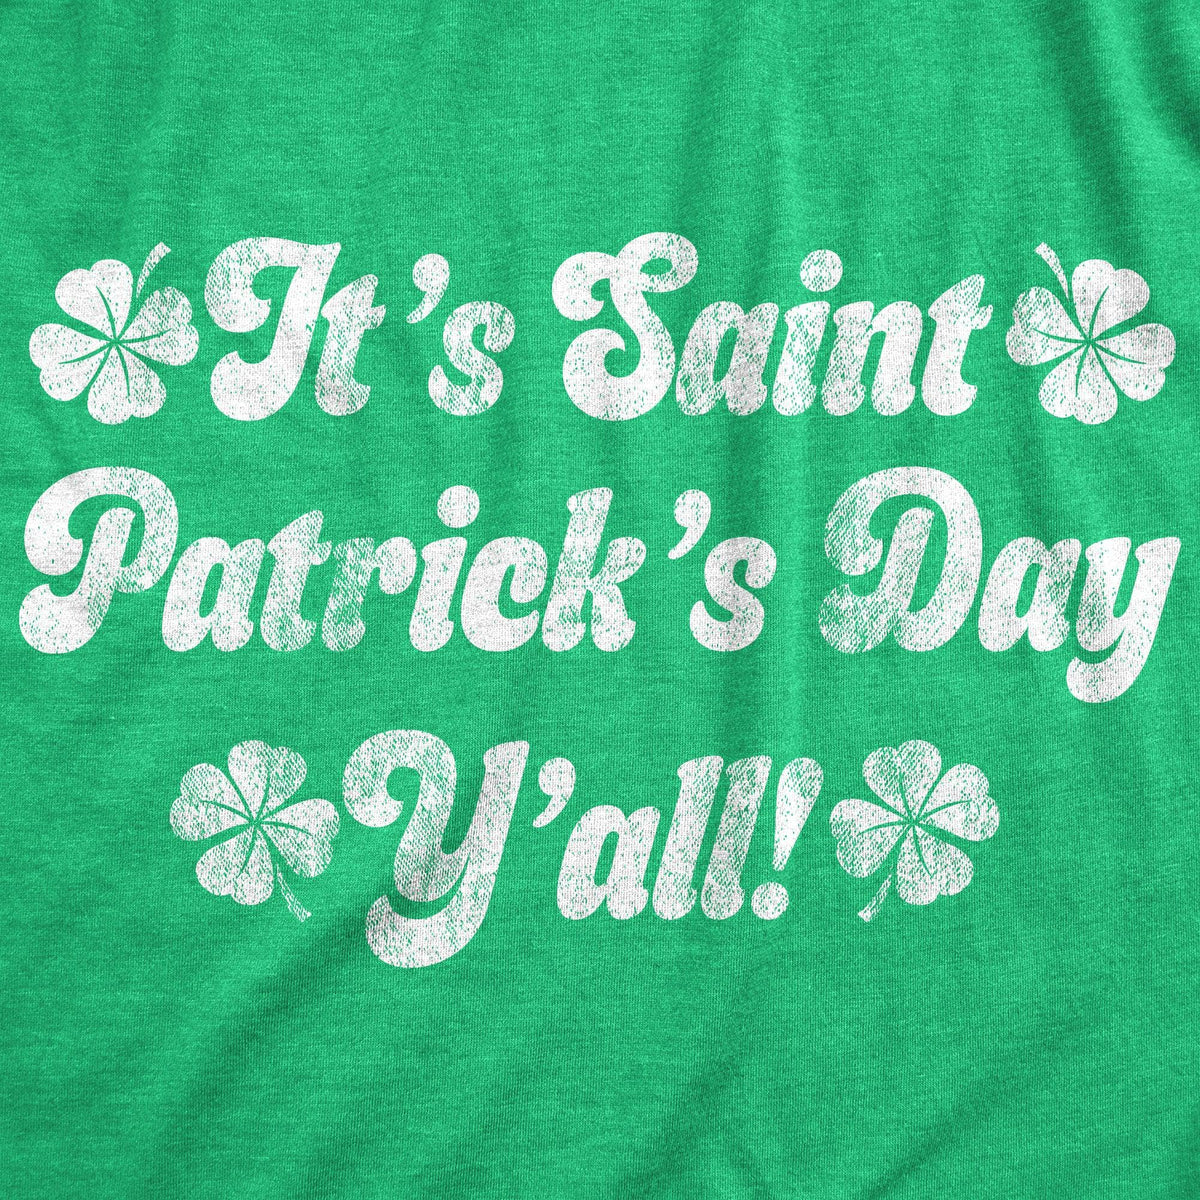 It&#39;s Saint Patrick&#39;s Day Y&#39;all Women&#39;s Tshirt  -  Crazy Dog T-Shirts